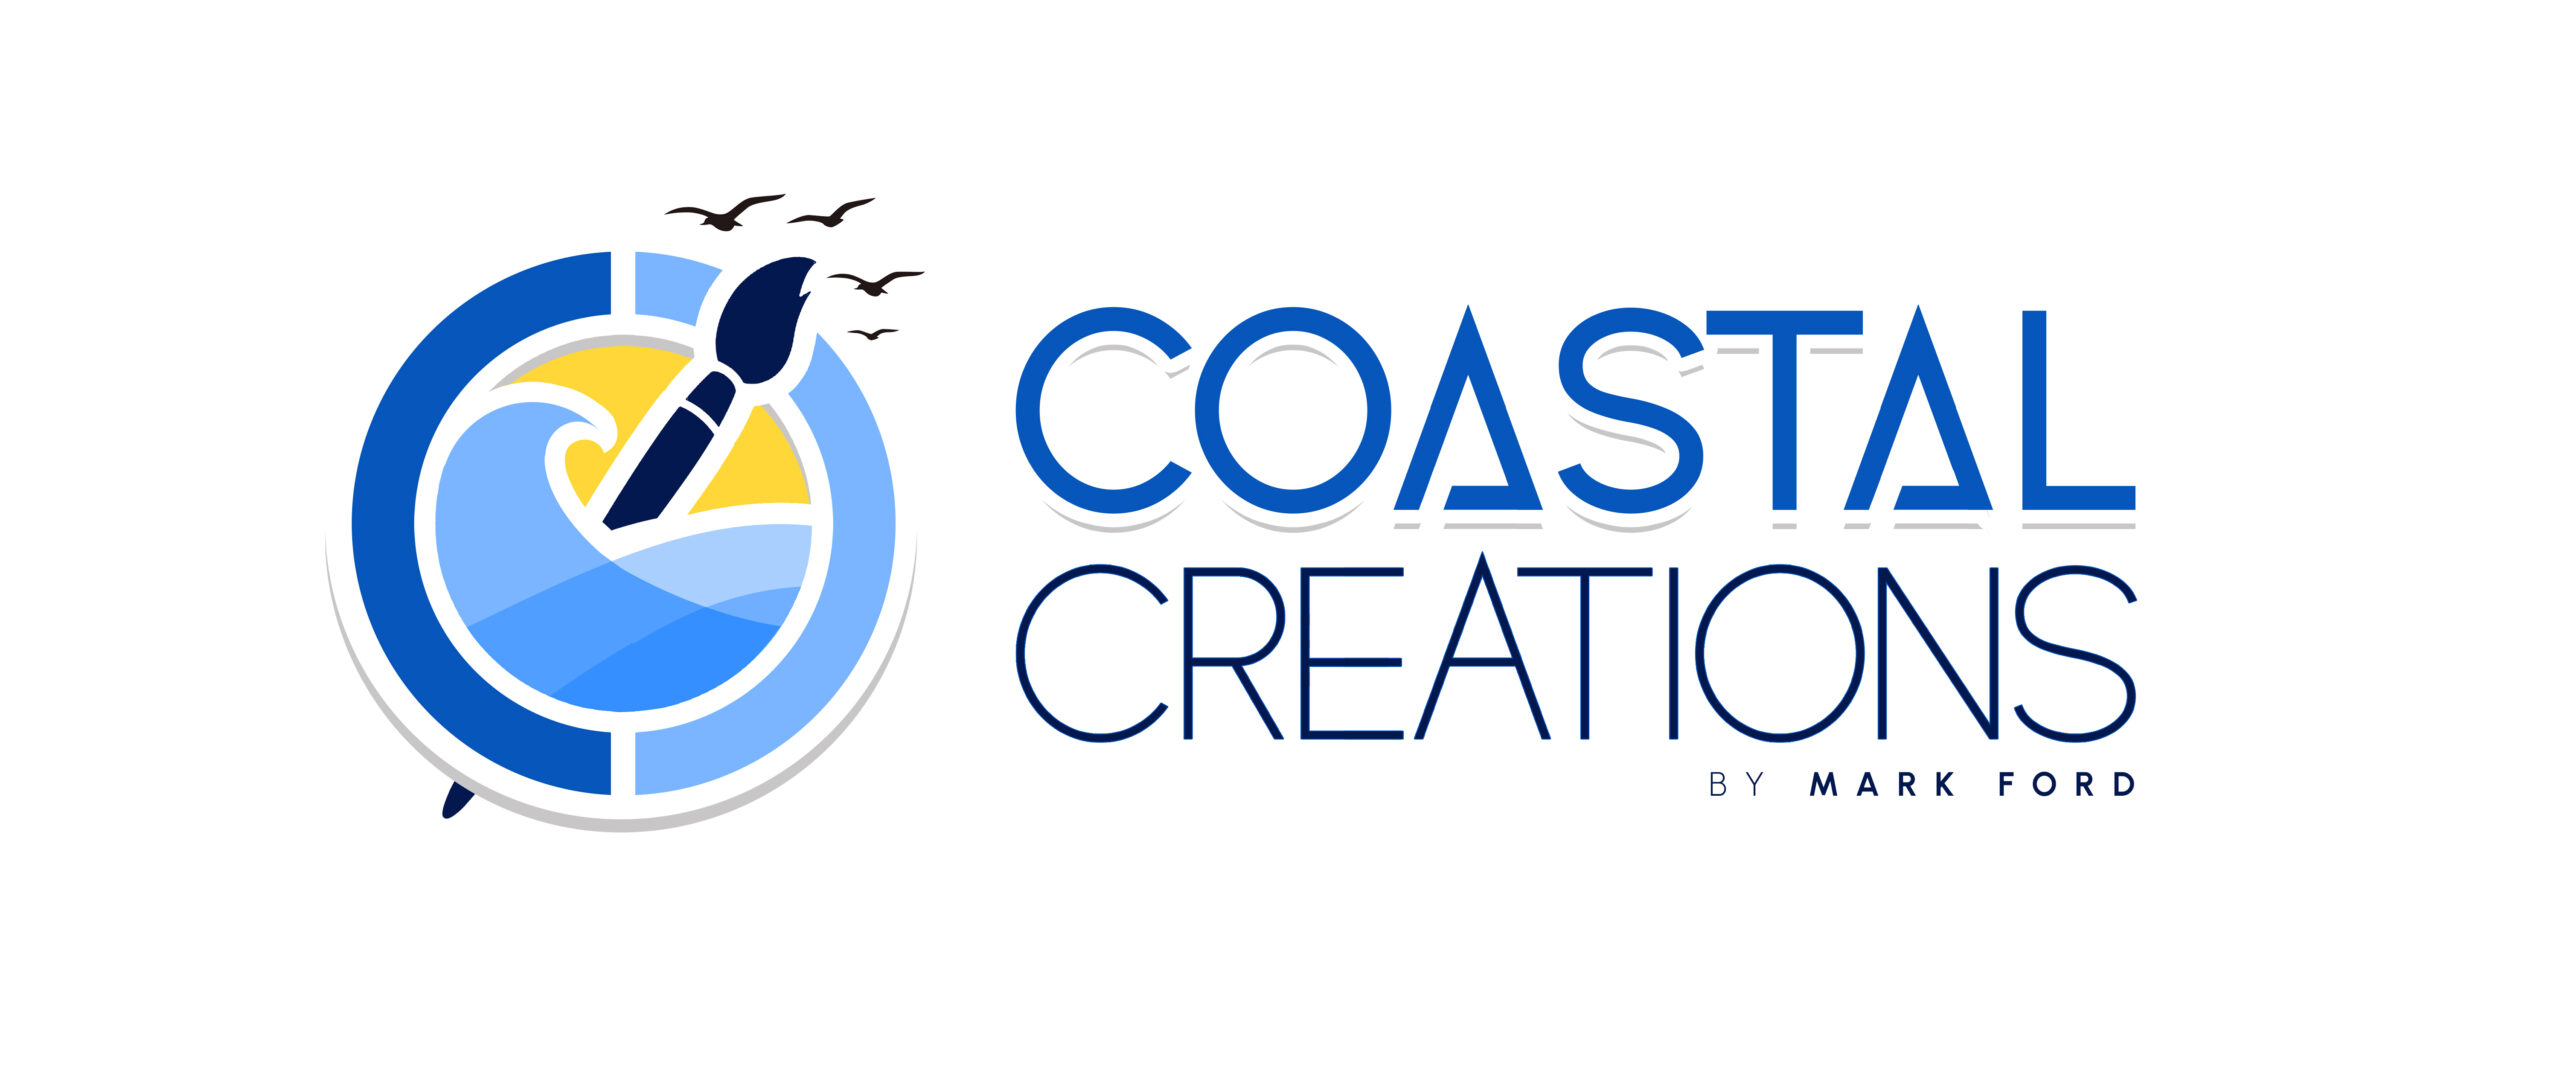 Coastal Creations by Mark Ford